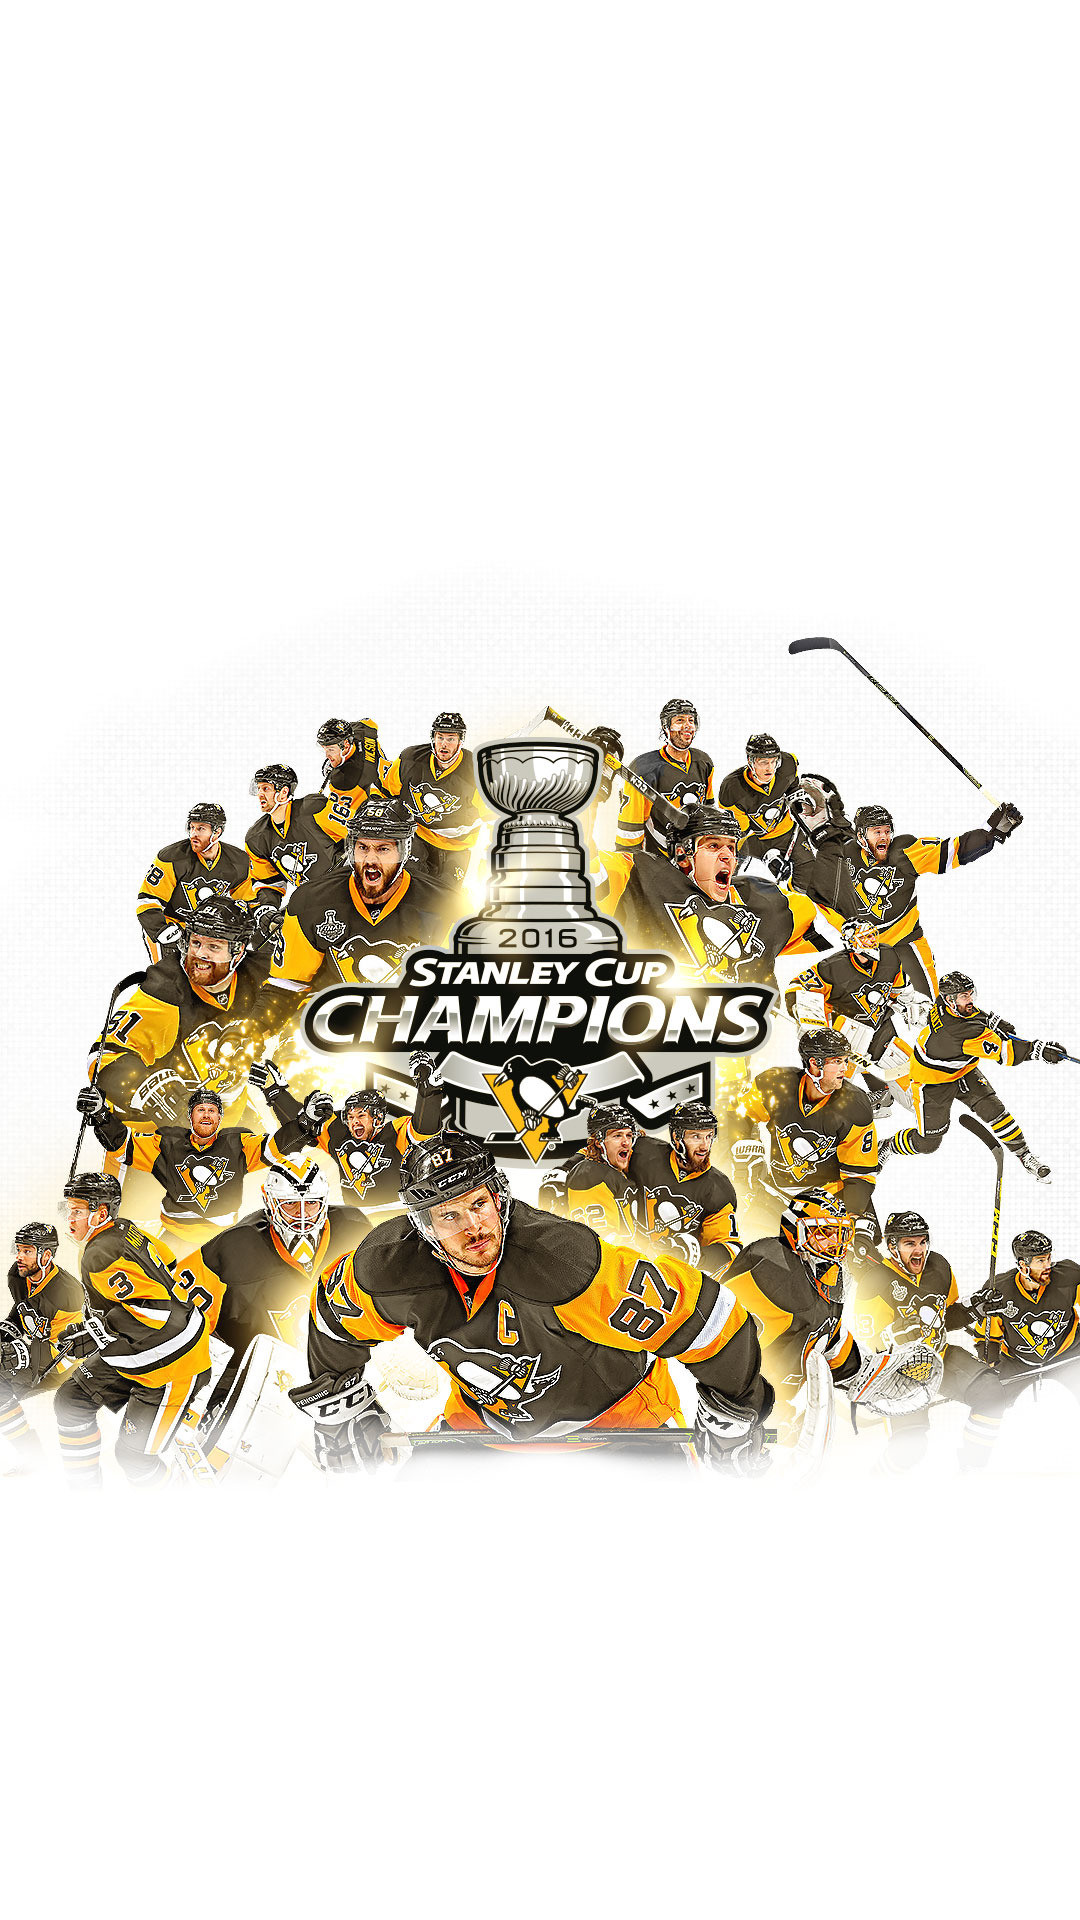 1080x1920 Pittsburgh Penguins Backgrounds Wallpaper | HD Wallpapers | Pinterest |  Wallpaper